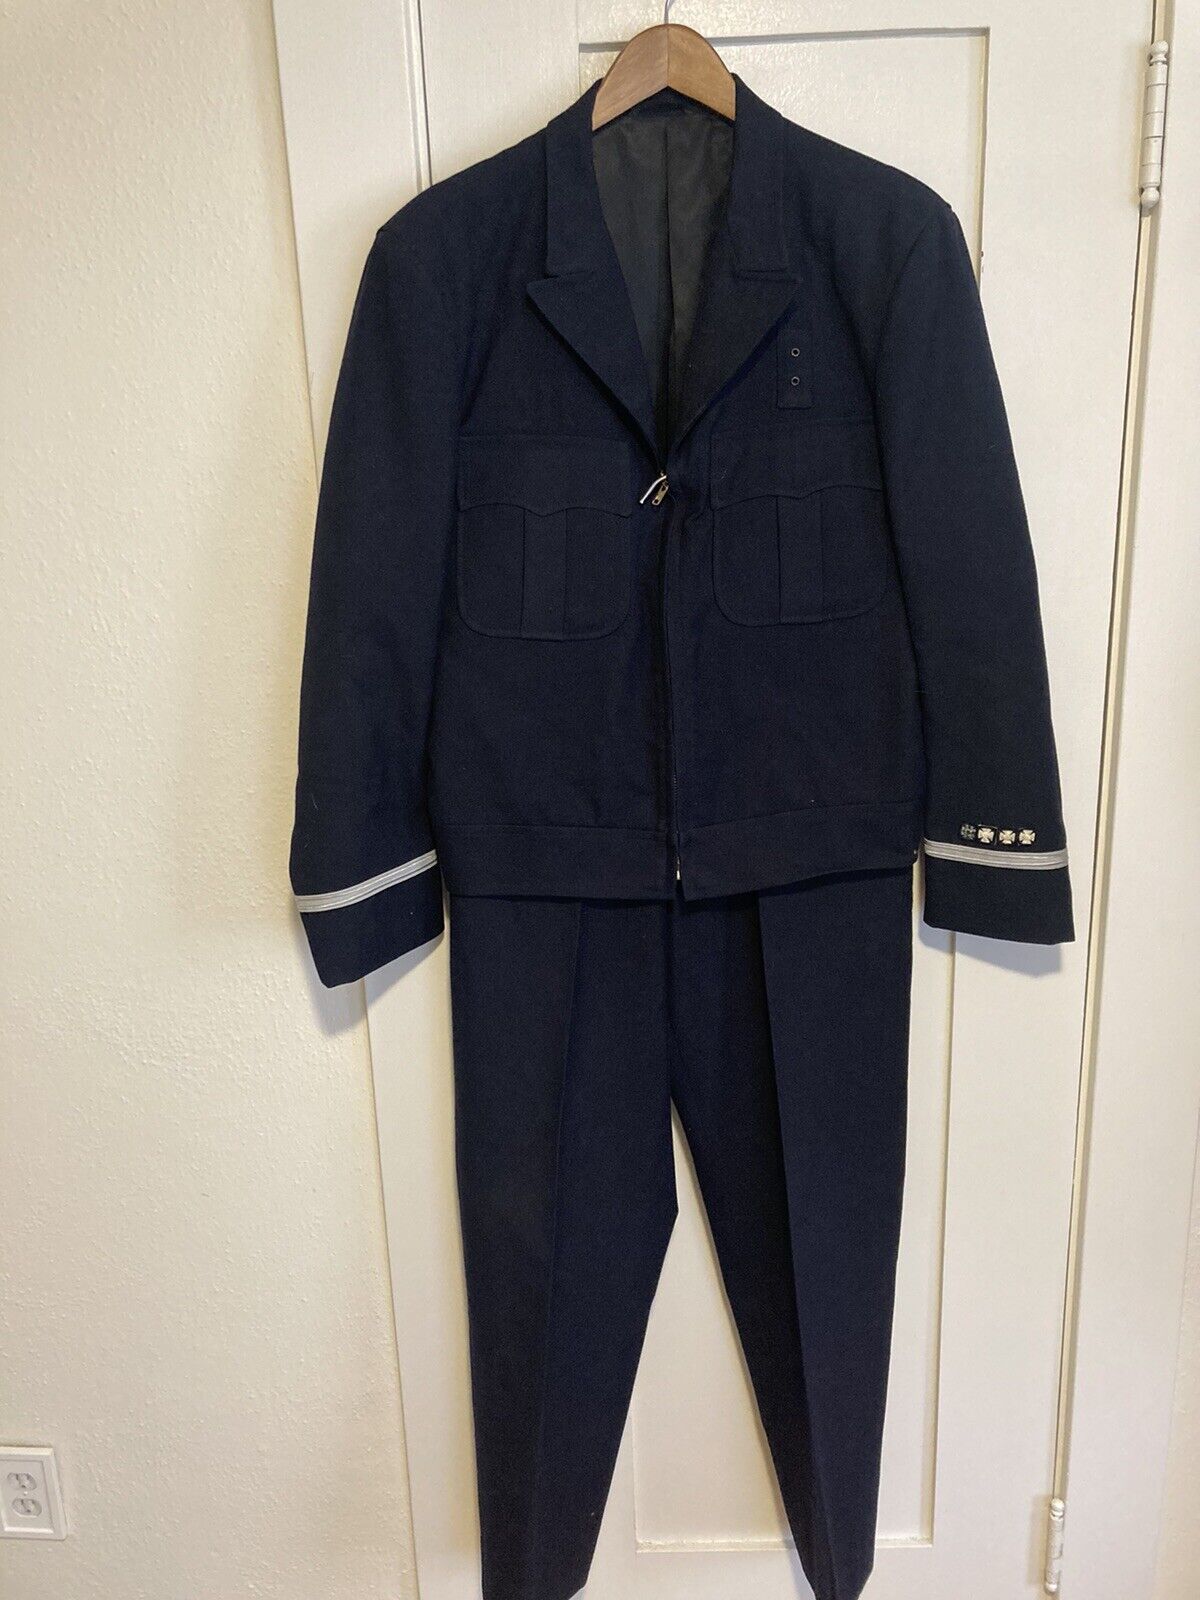 Vtg 1970’s American Airlines? Pilot Wool Uniform 41 Jacket 32x31 Pants